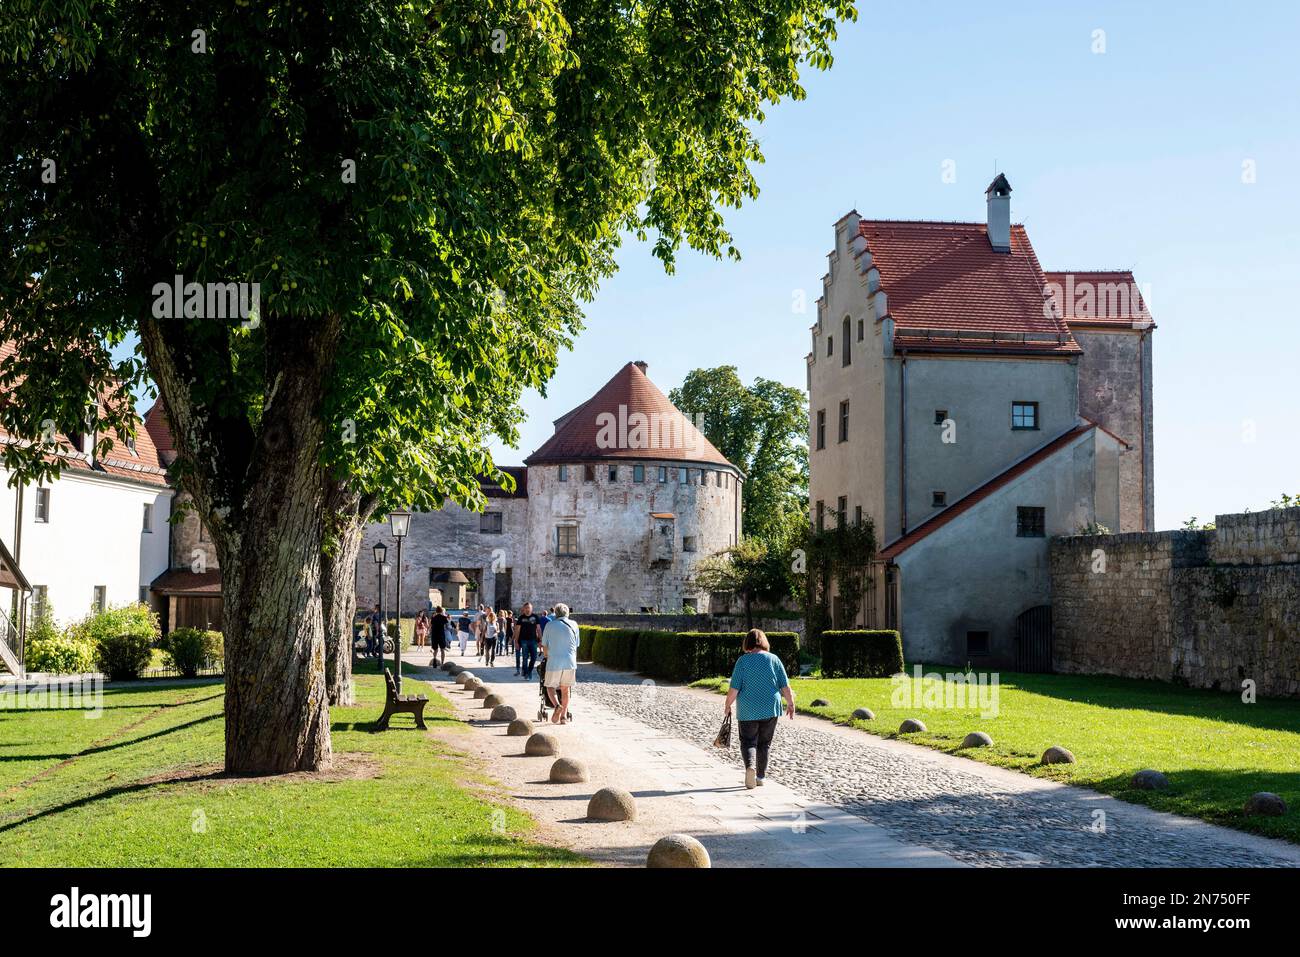 Inside iconic Burghausen castle in Bavaria, the longest world's longest castle, Germany Stock Photo